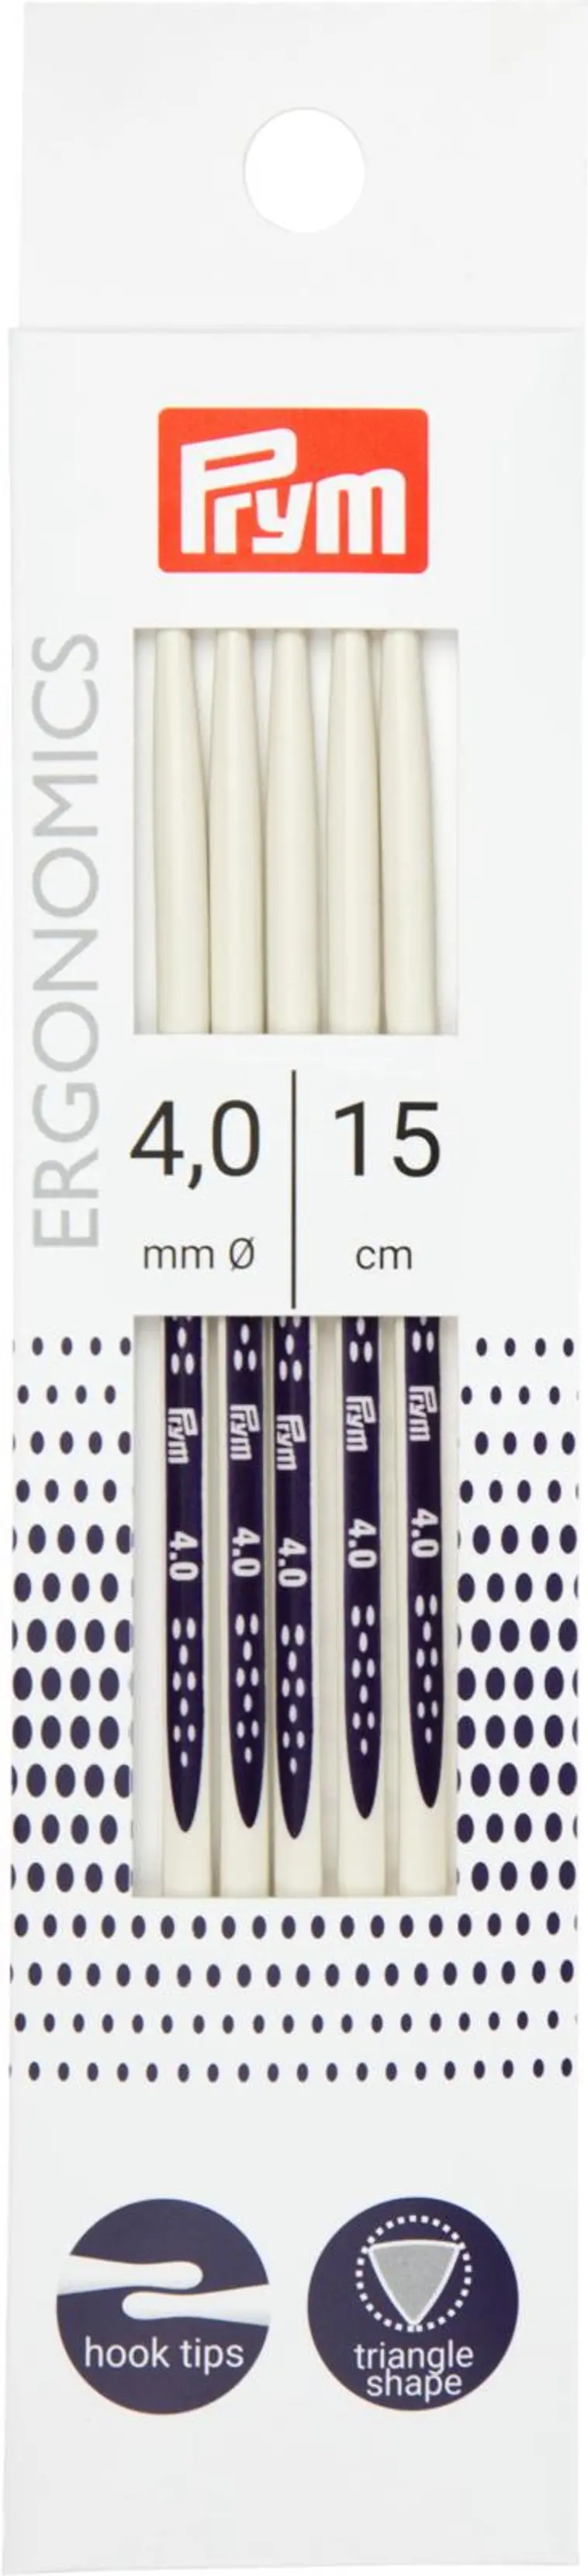 Prym Sukkapuikko Ergo 15cm - 4 mm | Prisma verkkokauppa